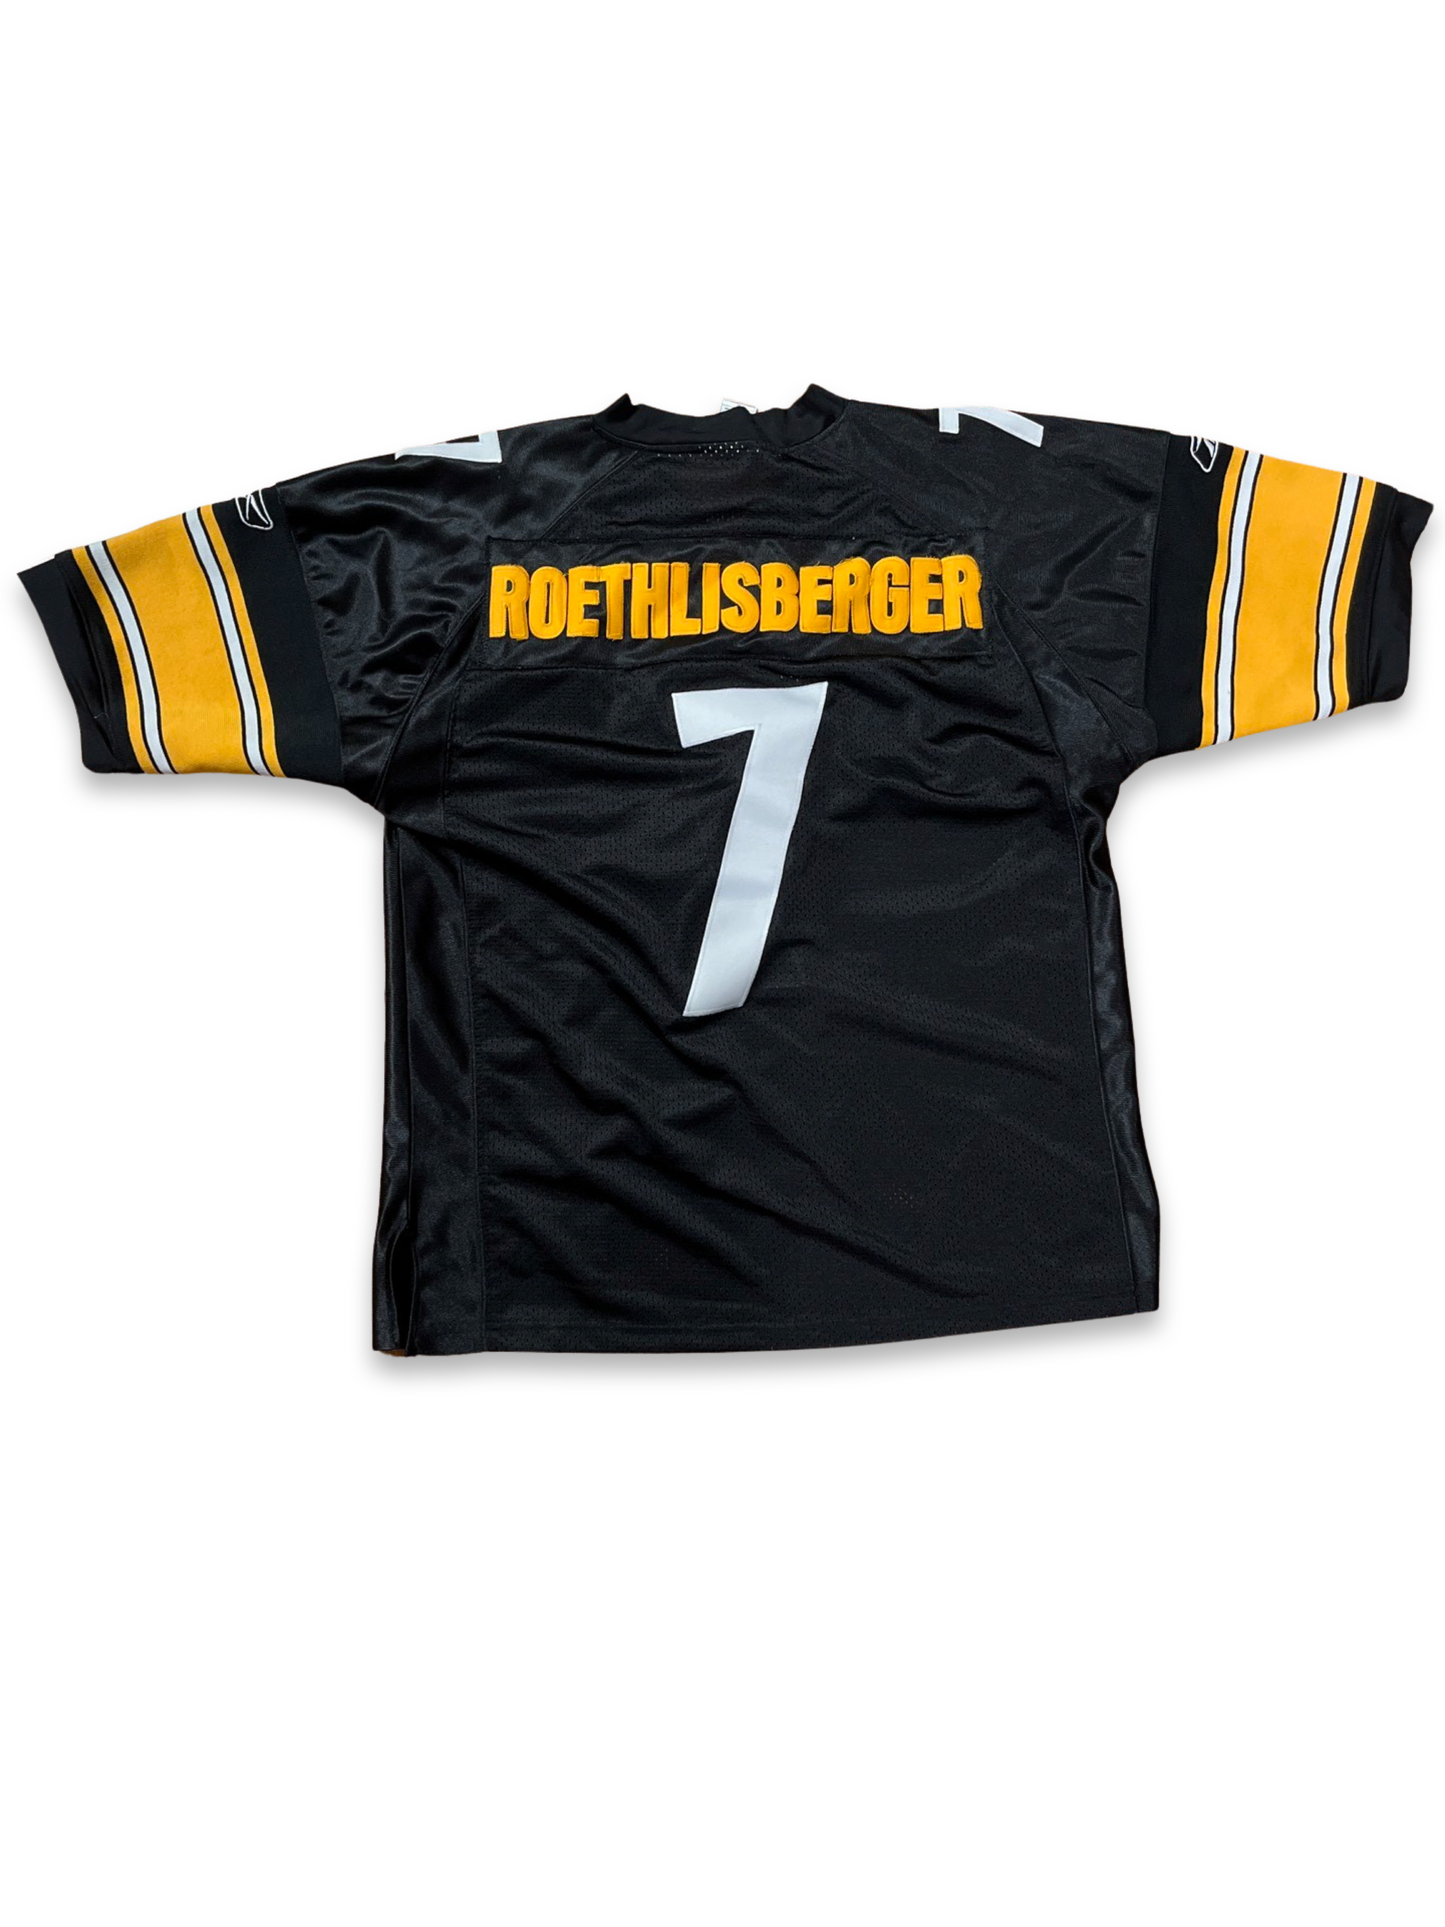 NFL On Field Jersey - Roethlisberger